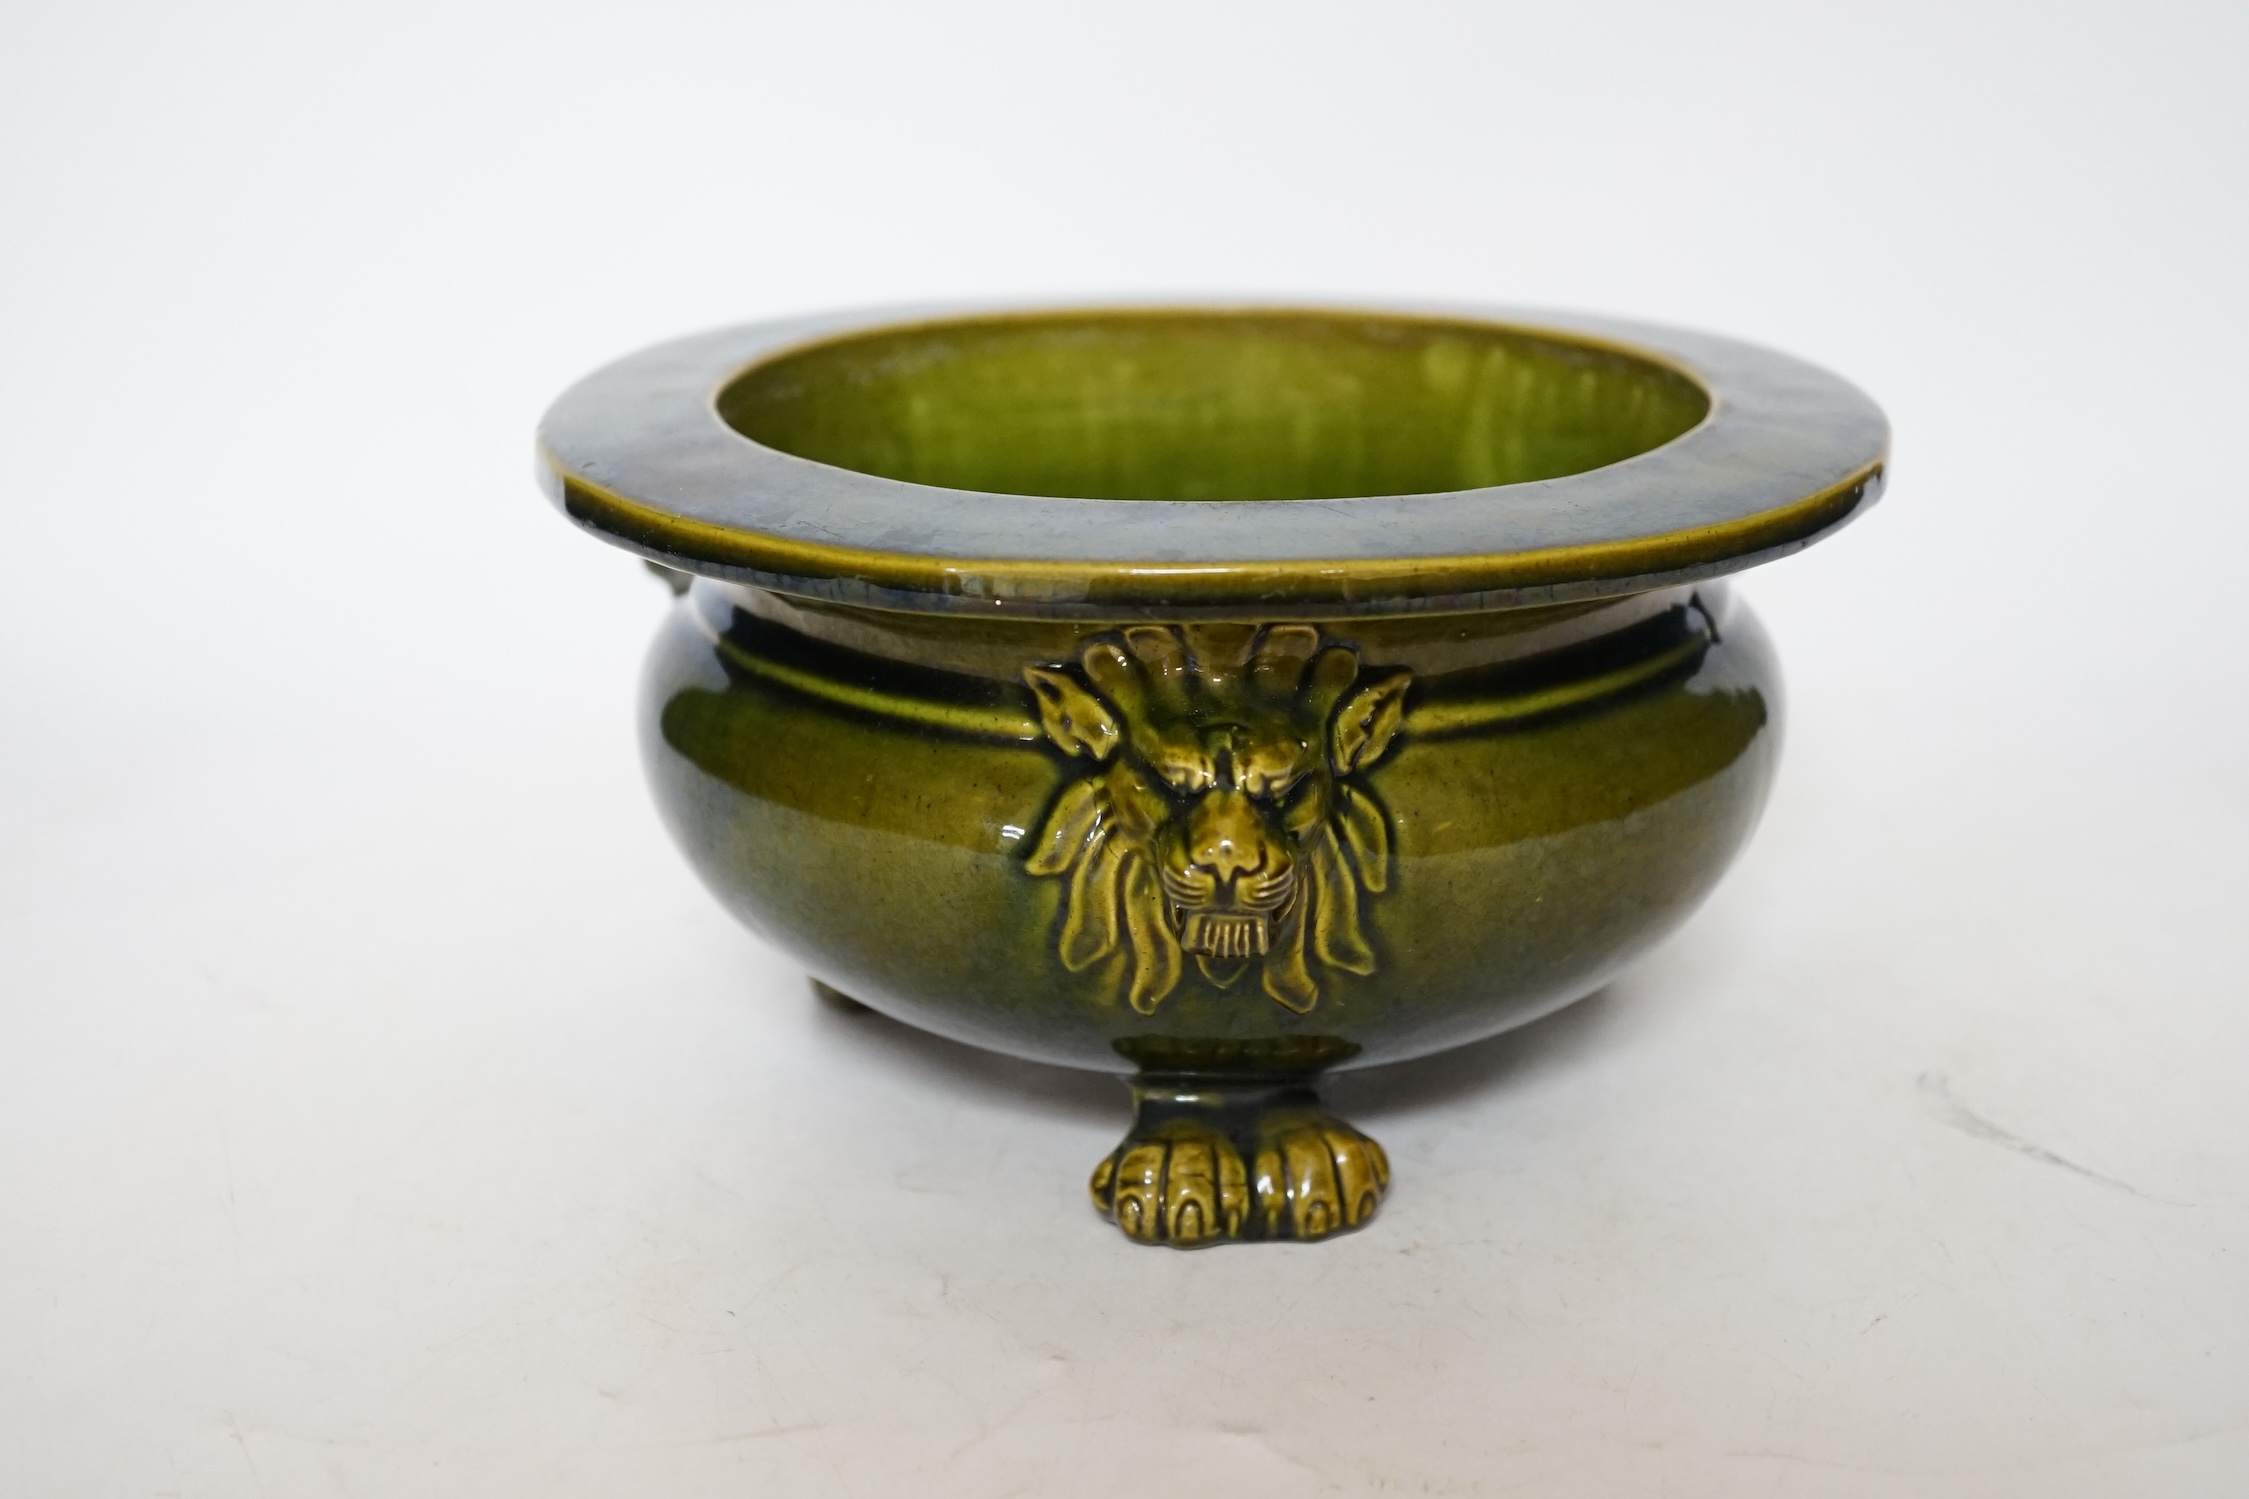 A green glazed Art pottery planter raised on three paw feet, diameter 20.5cm. Condition - good